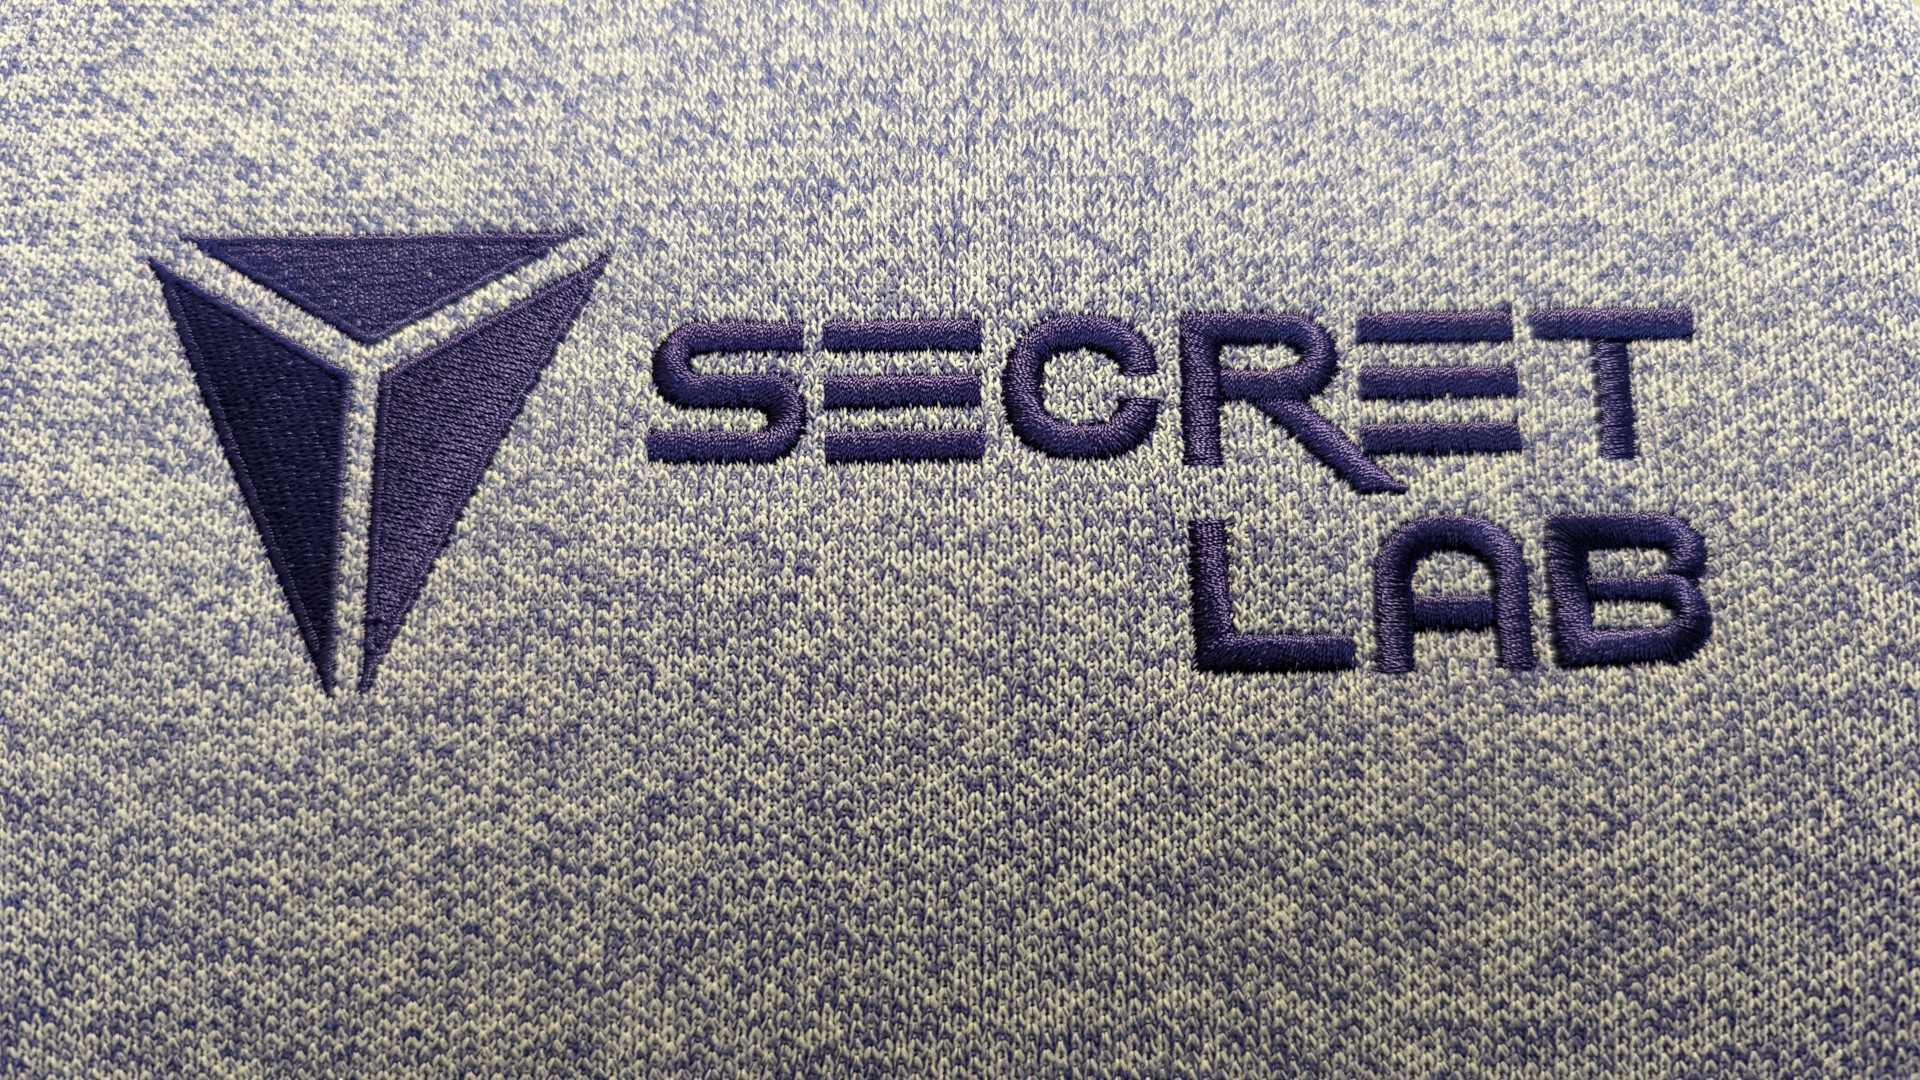 The Secretlab logo, stitched in purple against a lighter tone